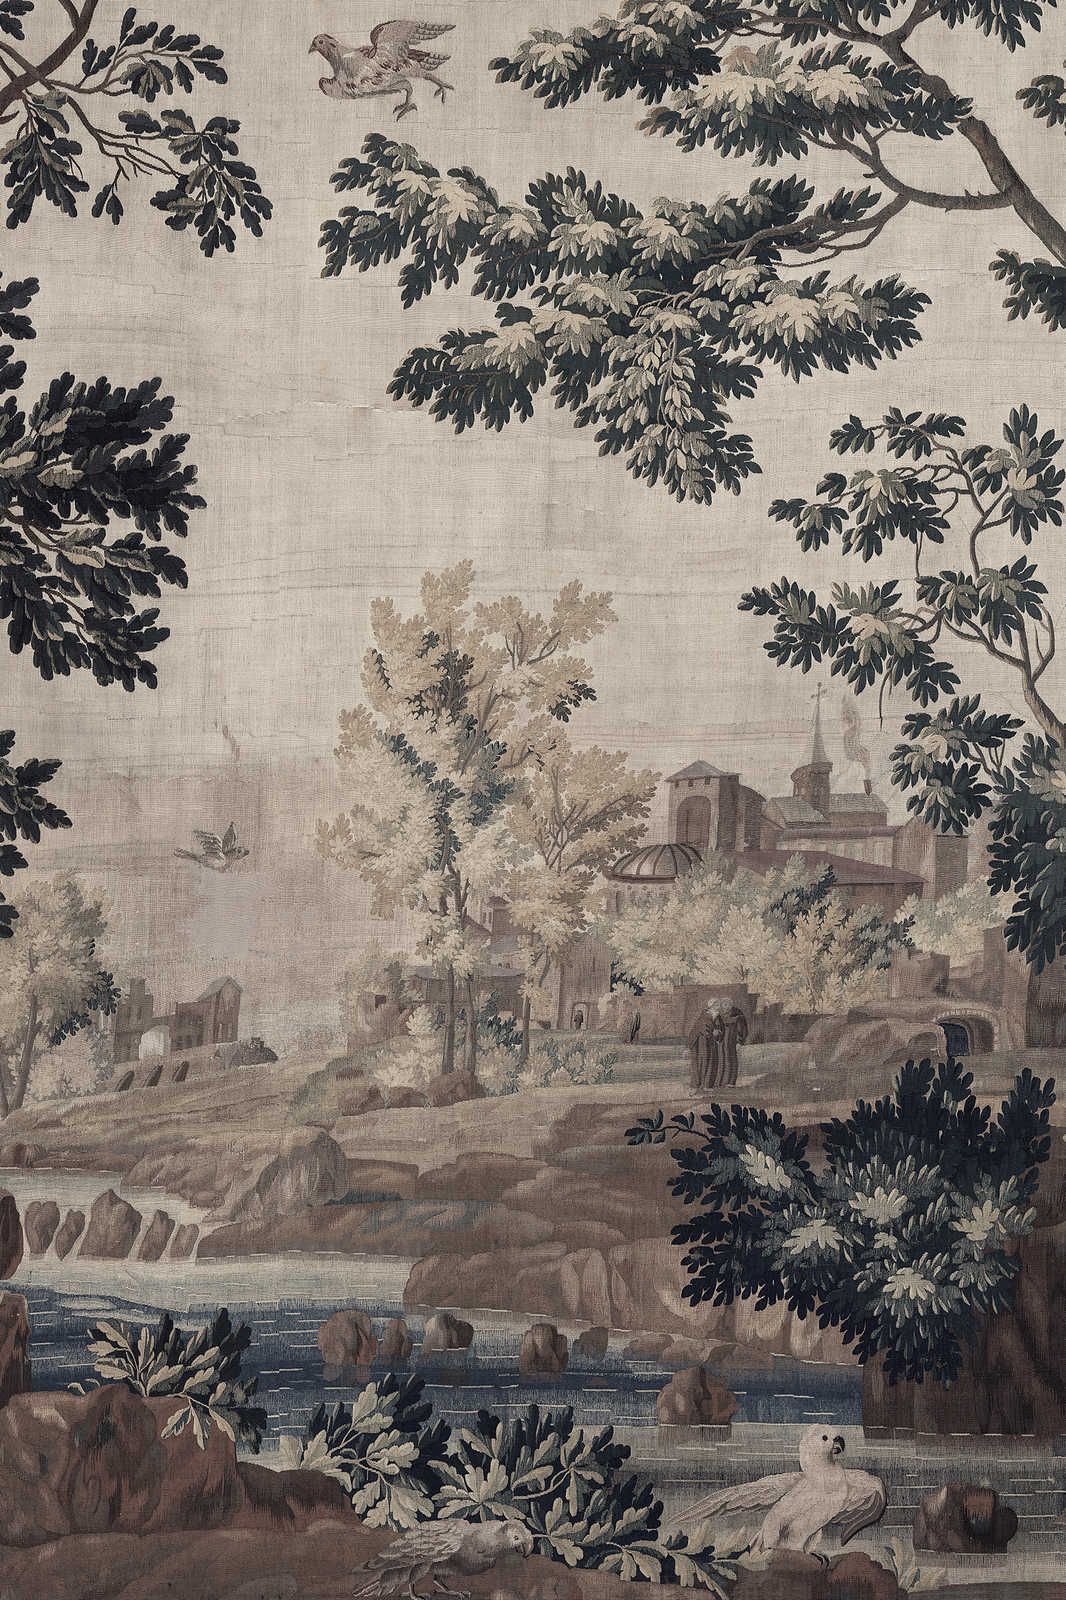             Tapiz Galería 1 - Cuadro lienzo paisaje tapiz histórico - 0,90 m x 0,60 m
        